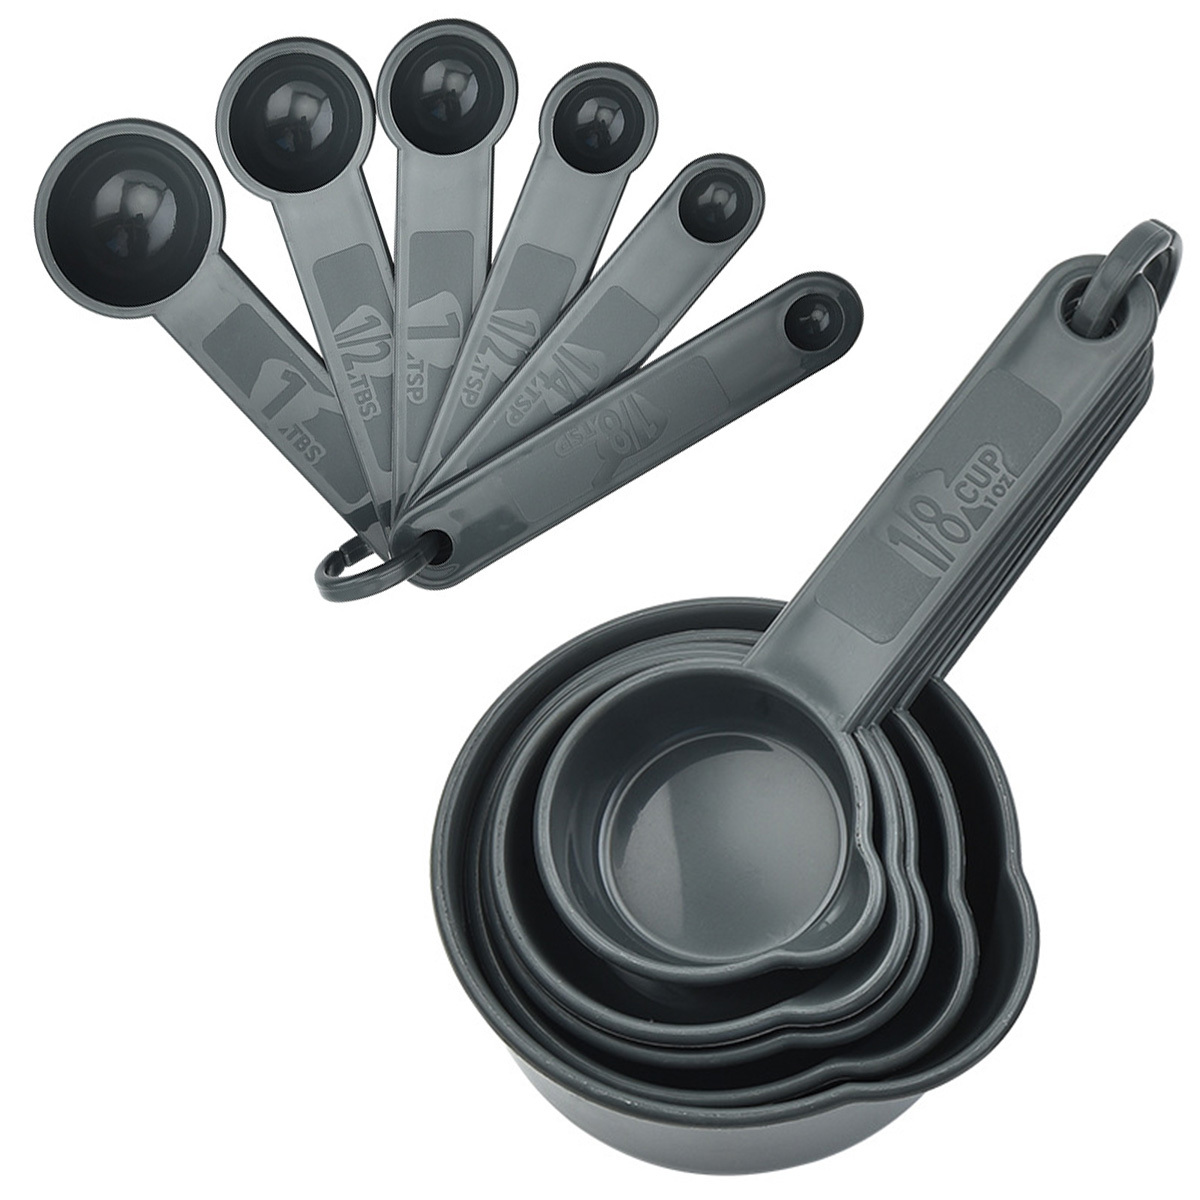 10PCS Plastic Stackable Measuring Cups & Spoons Set, 5 Measuring Cups & 5  Spoons, Food/Liquid/Baking, Delicate Measuring kitchen Measuring Set for  Baking & Cooking(Black)